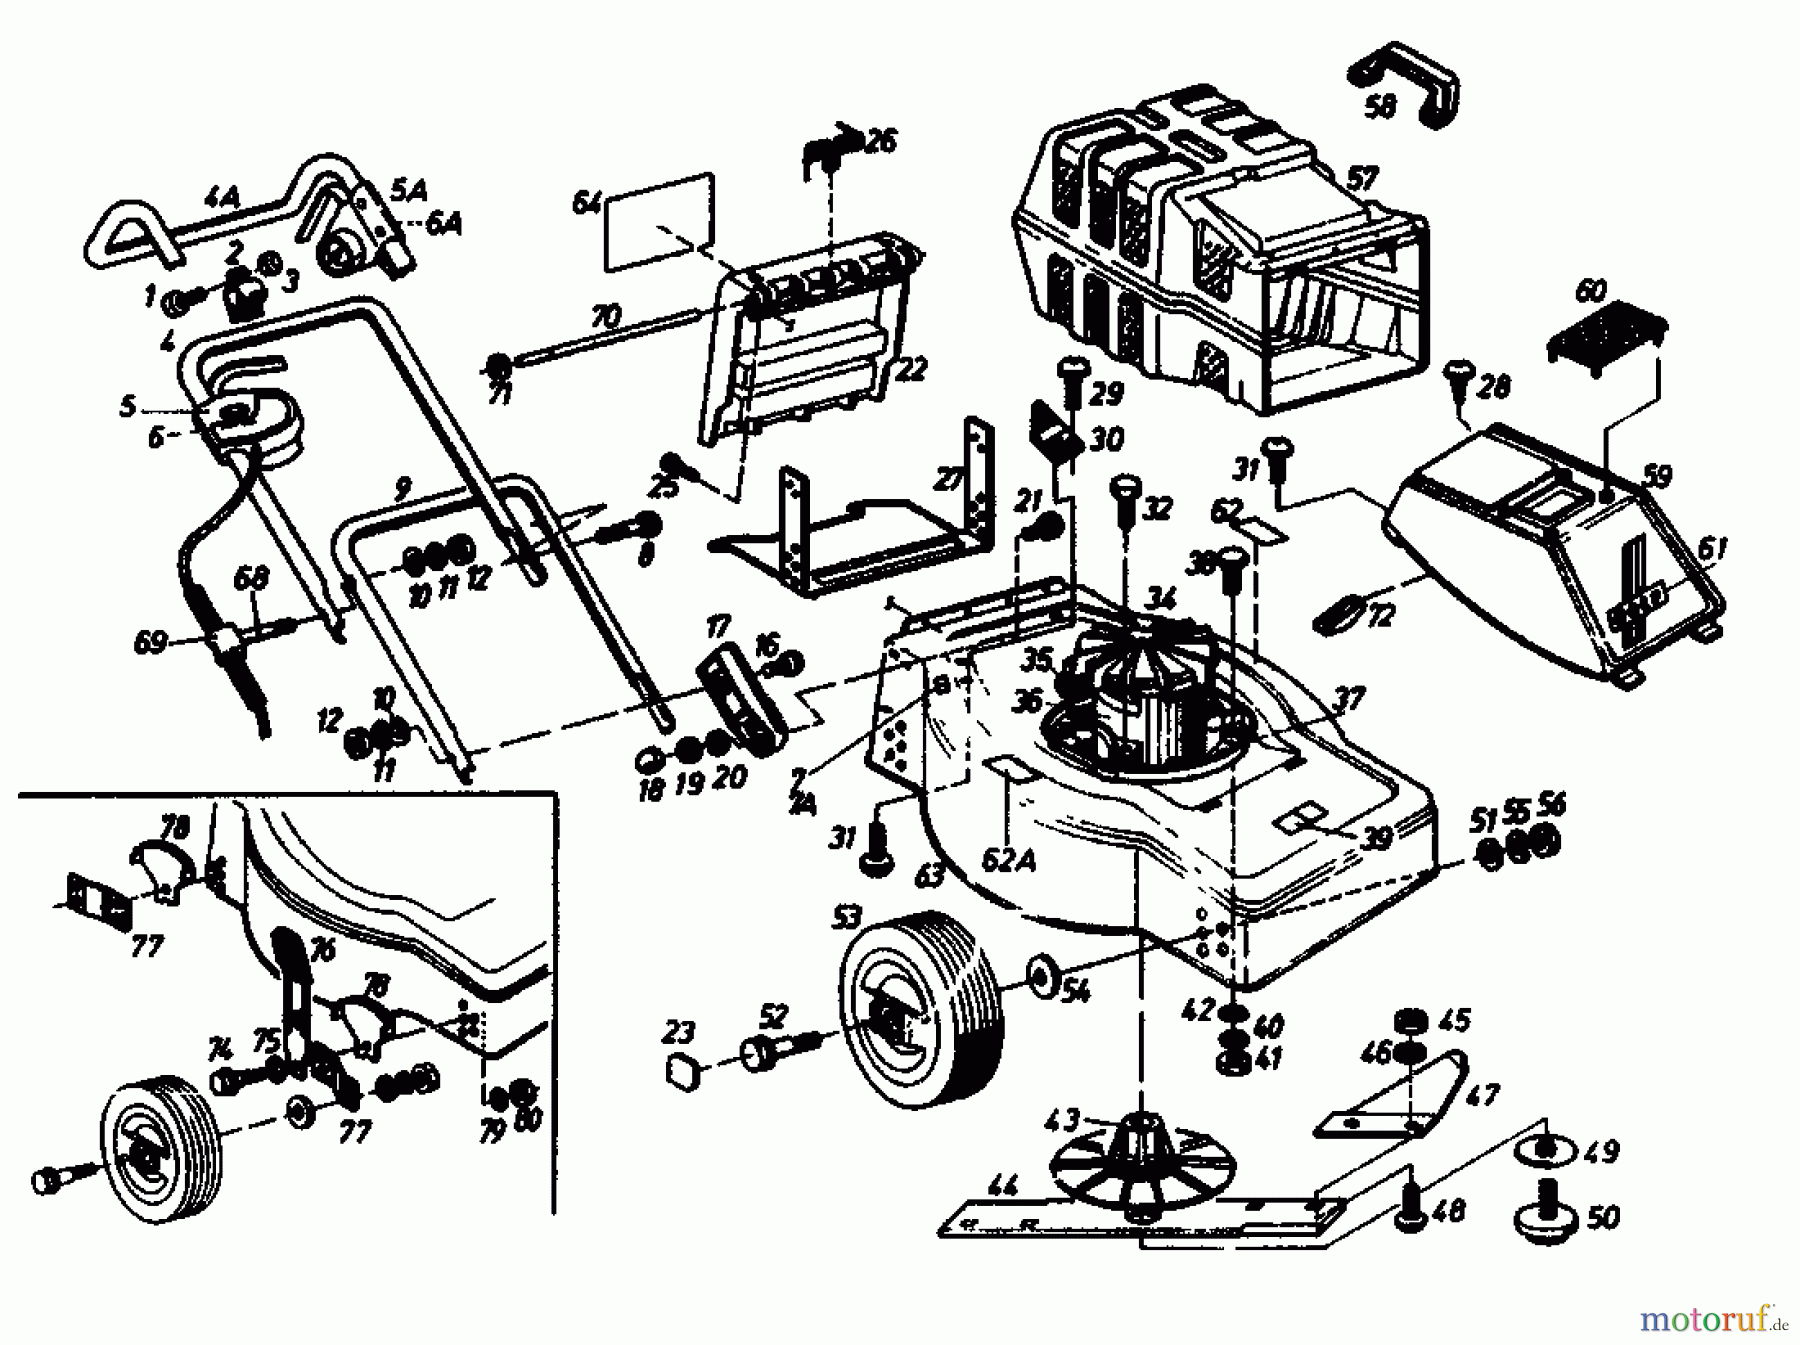  Golf Electric mower HEL 02881.05  (1989) Basic machine